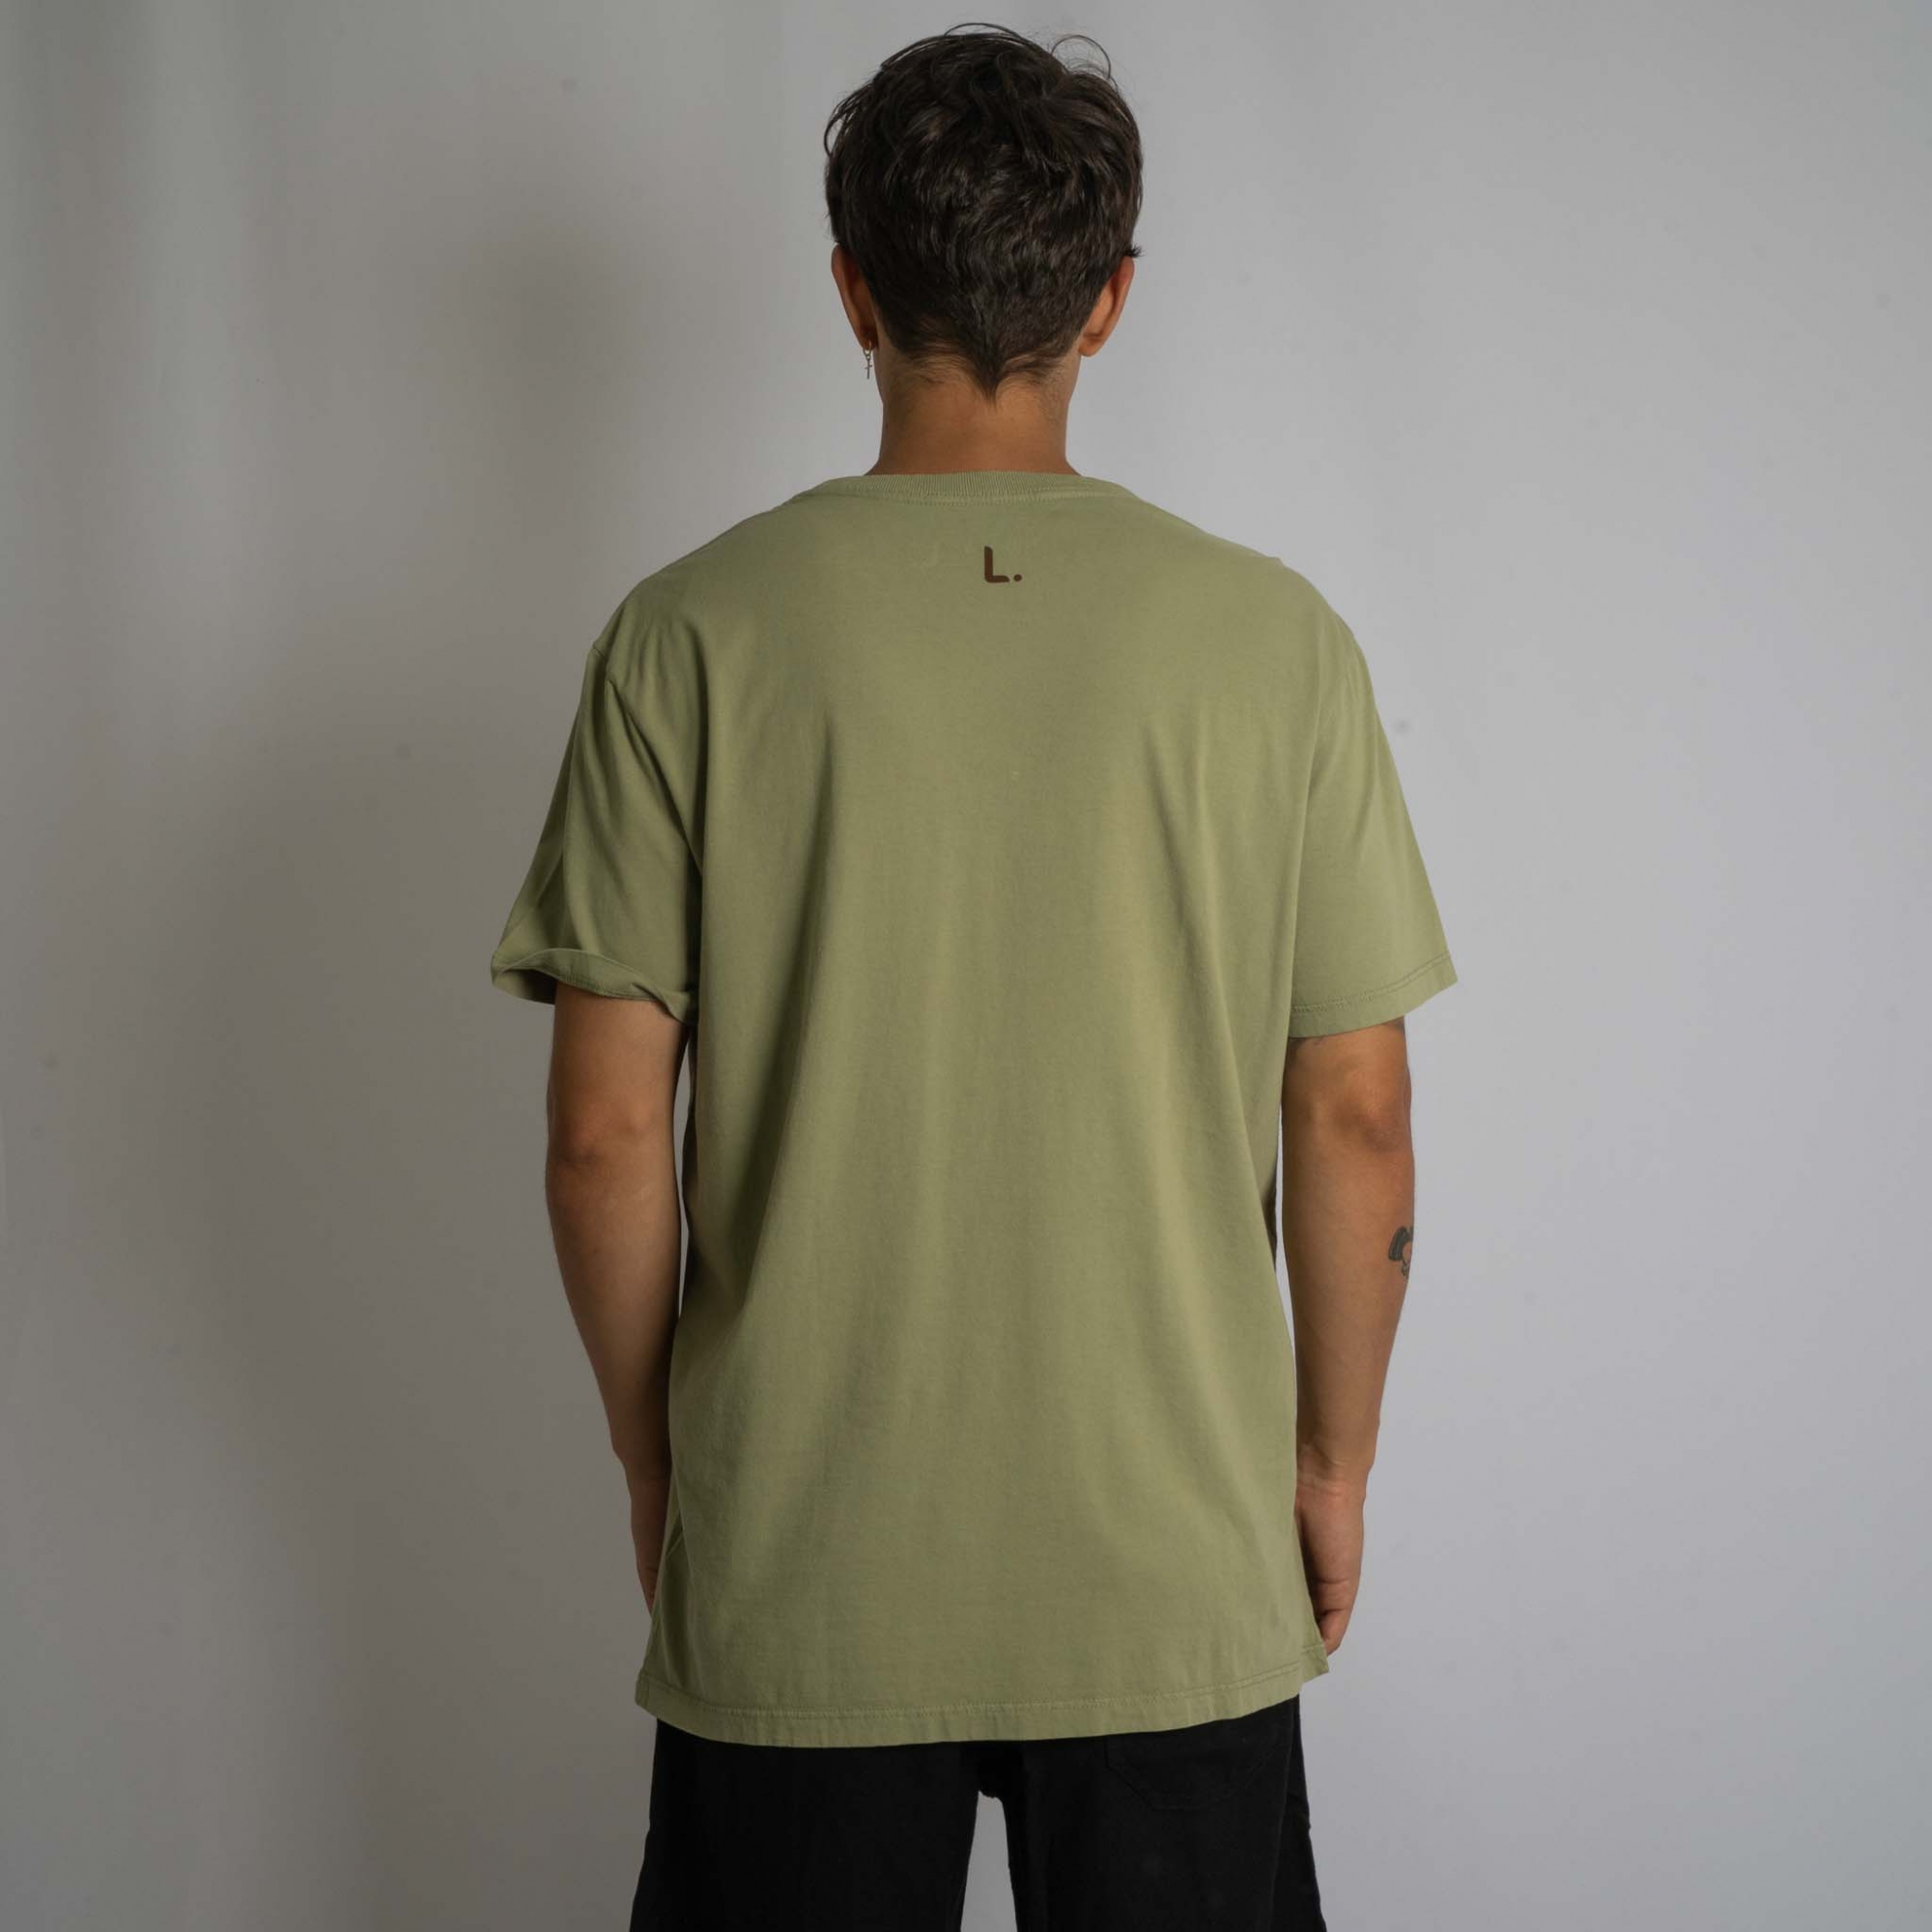 Camiseta Folha - Verde oliva